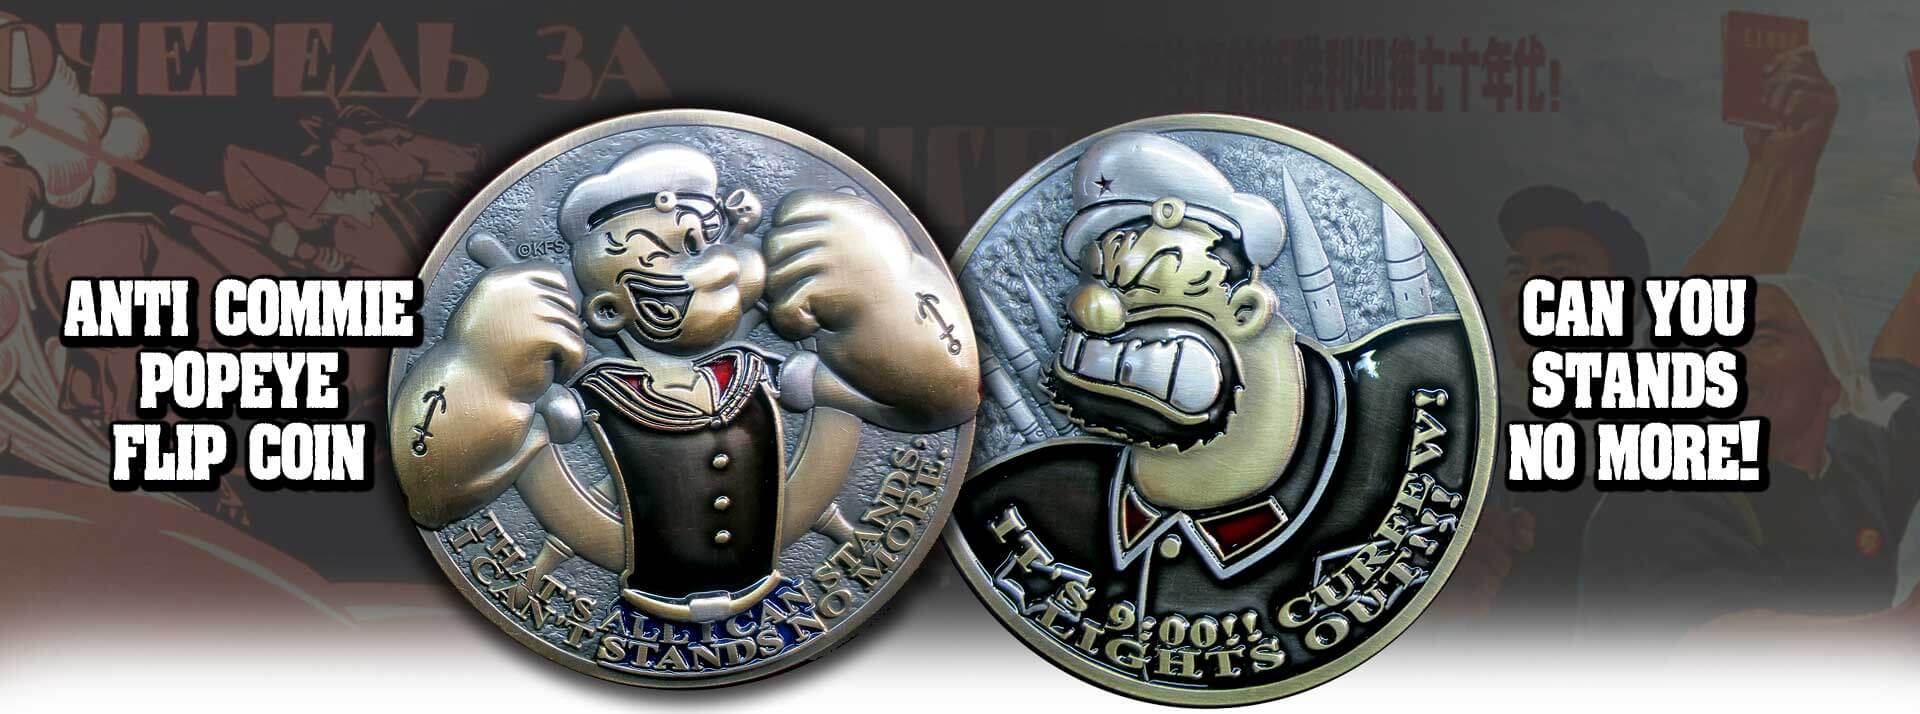 Popeye-Anti-Commie-Bluto-Flip-Coin